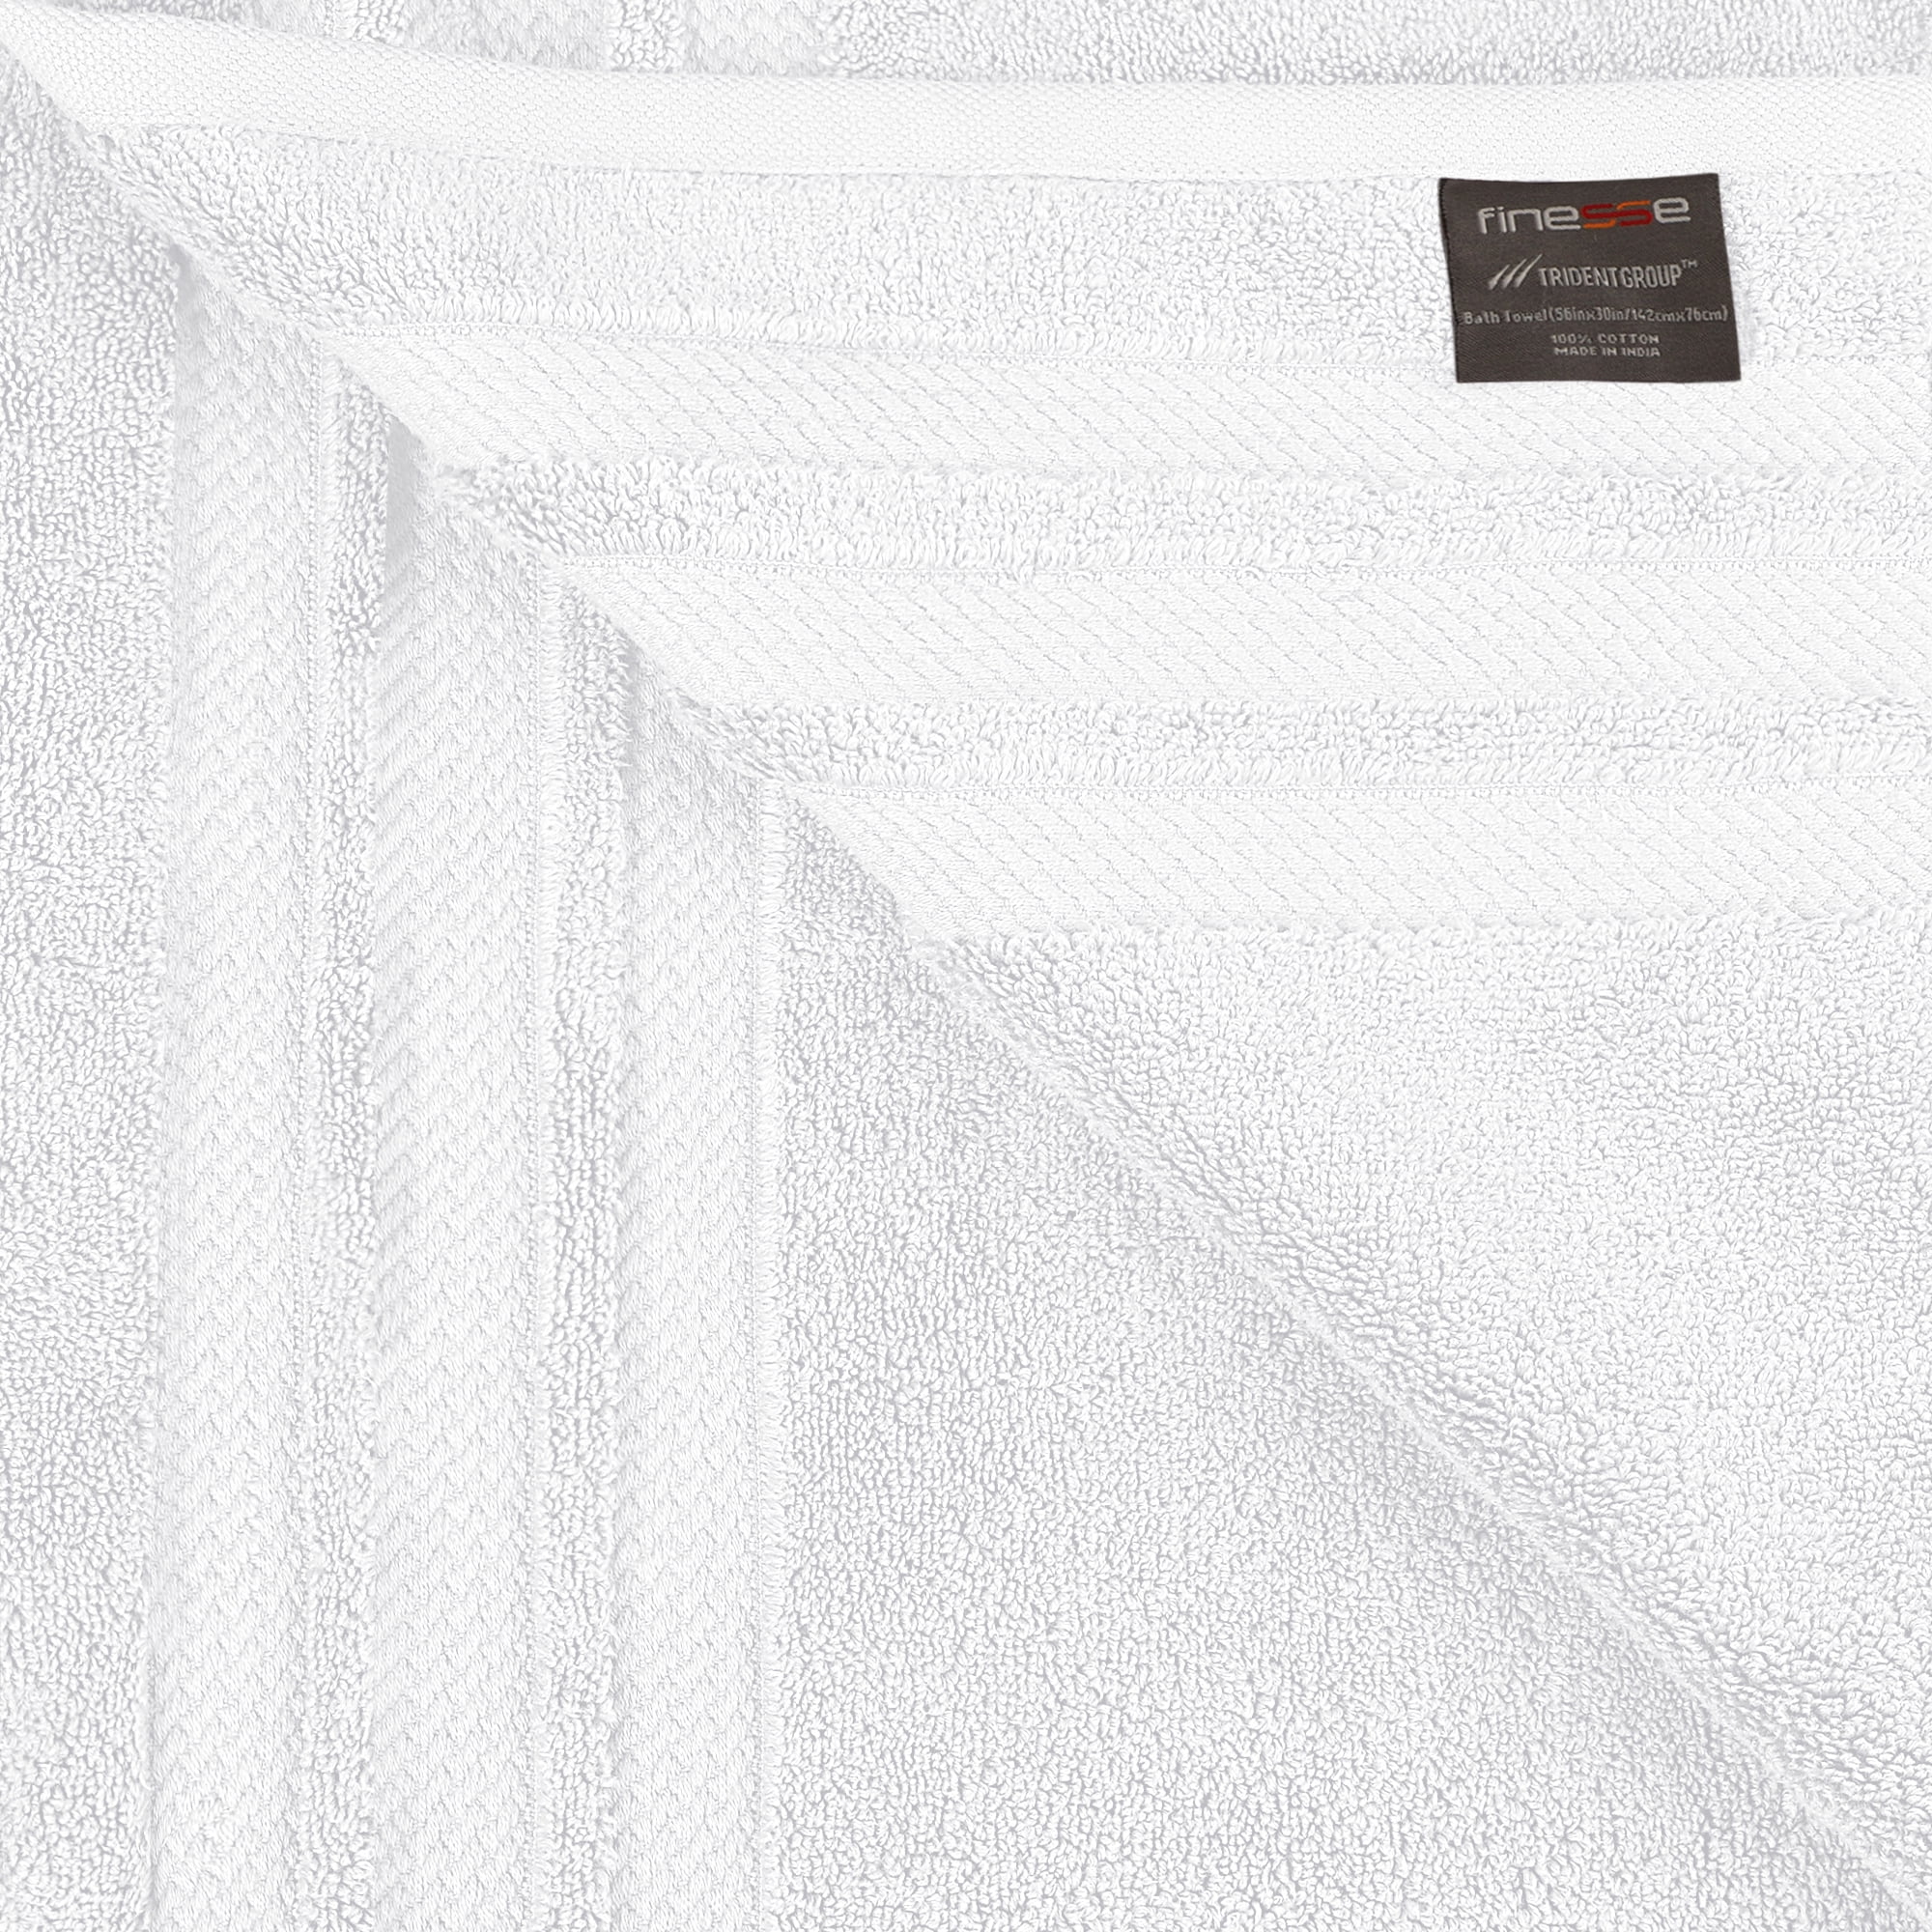 Trident Finesse 100% Cotton, 6-Piece Extra Large Towel Set, Purple Ash 